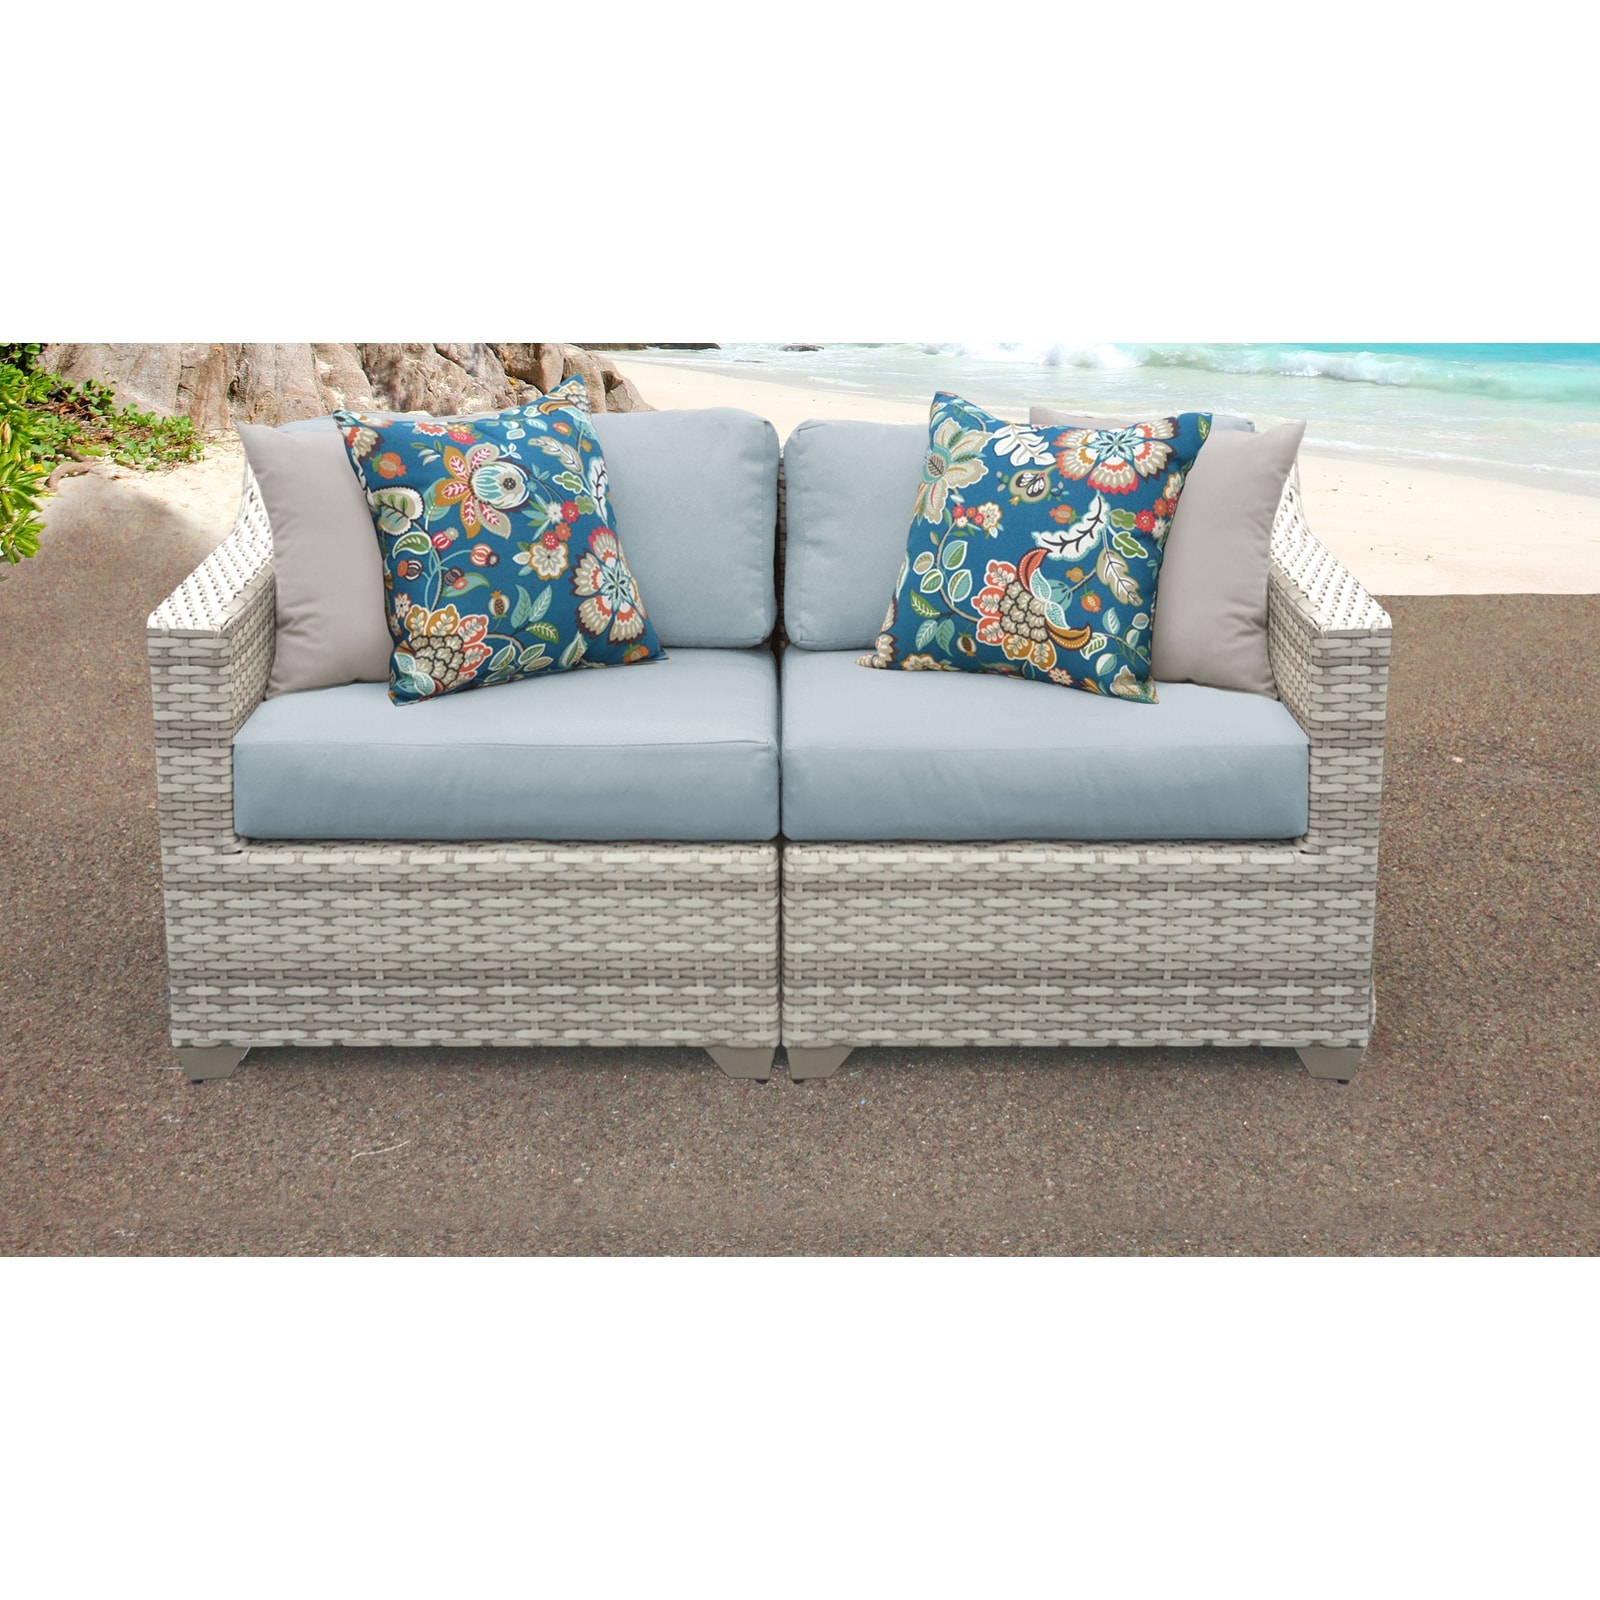 Fairmont 2-pc. Outdoor Wicker Furniture Set